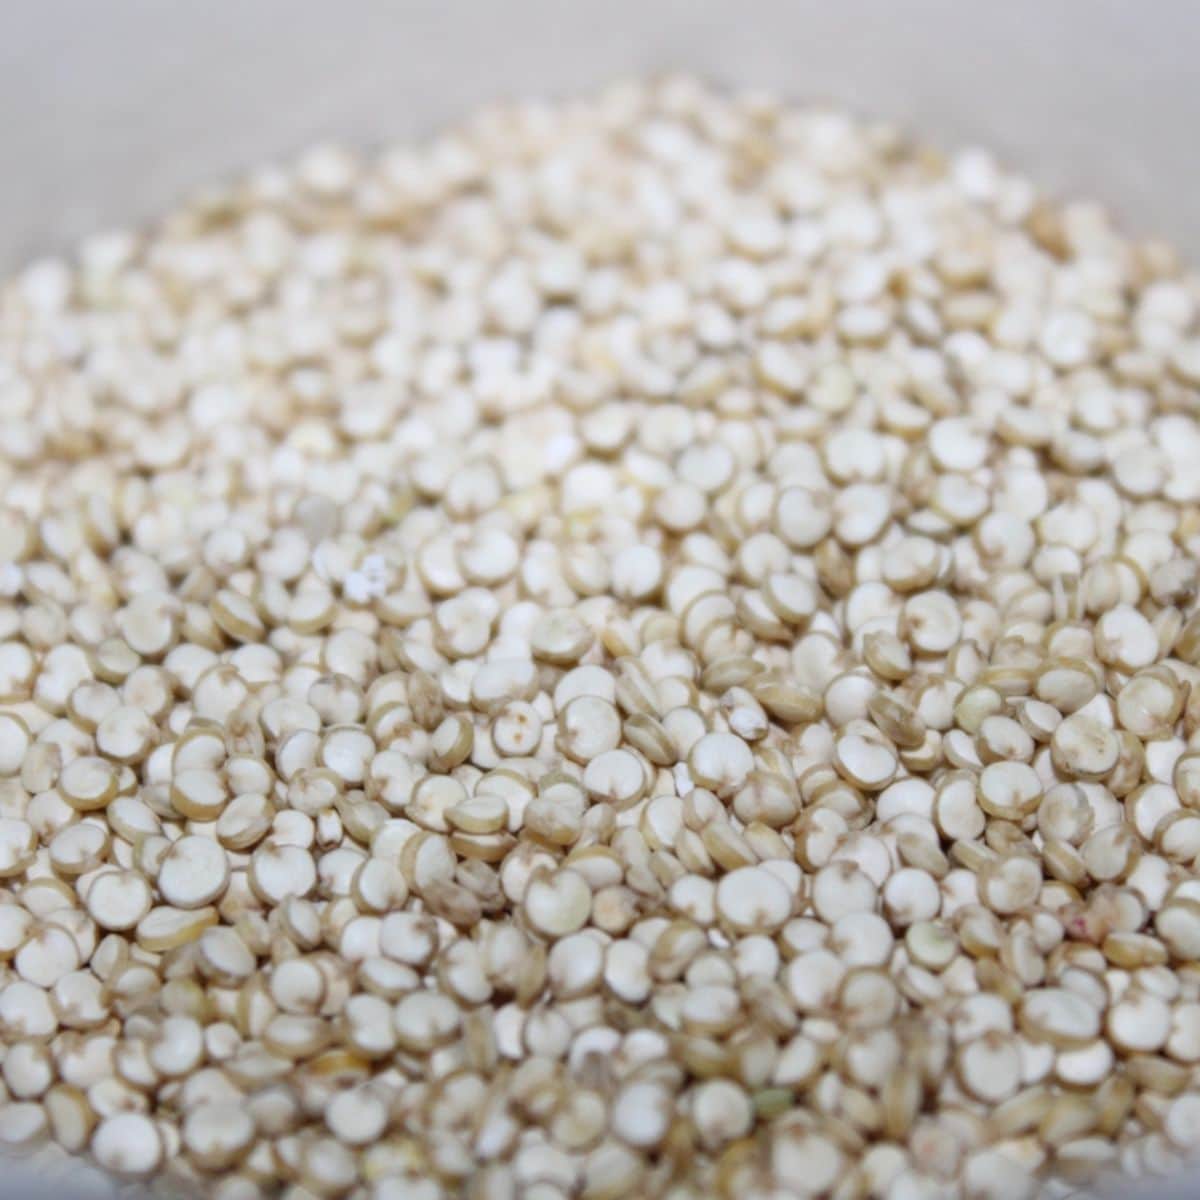 Quinoa Protein Content vs Meat | Health Benefits